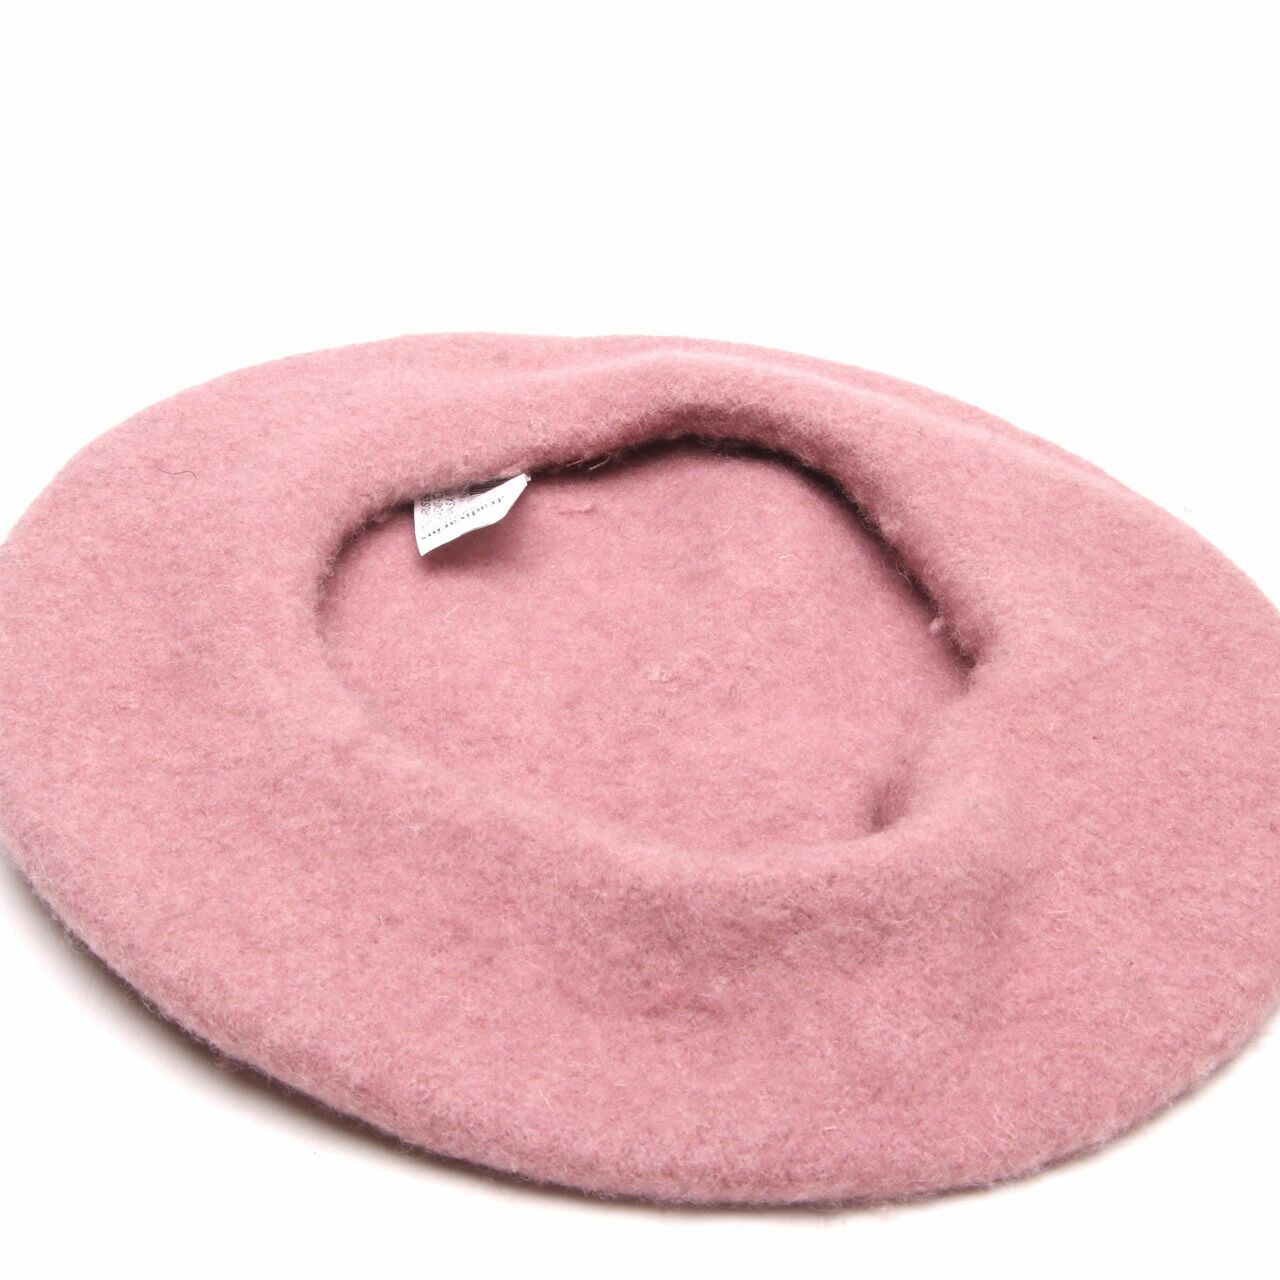 Stradivarius Pink Hats